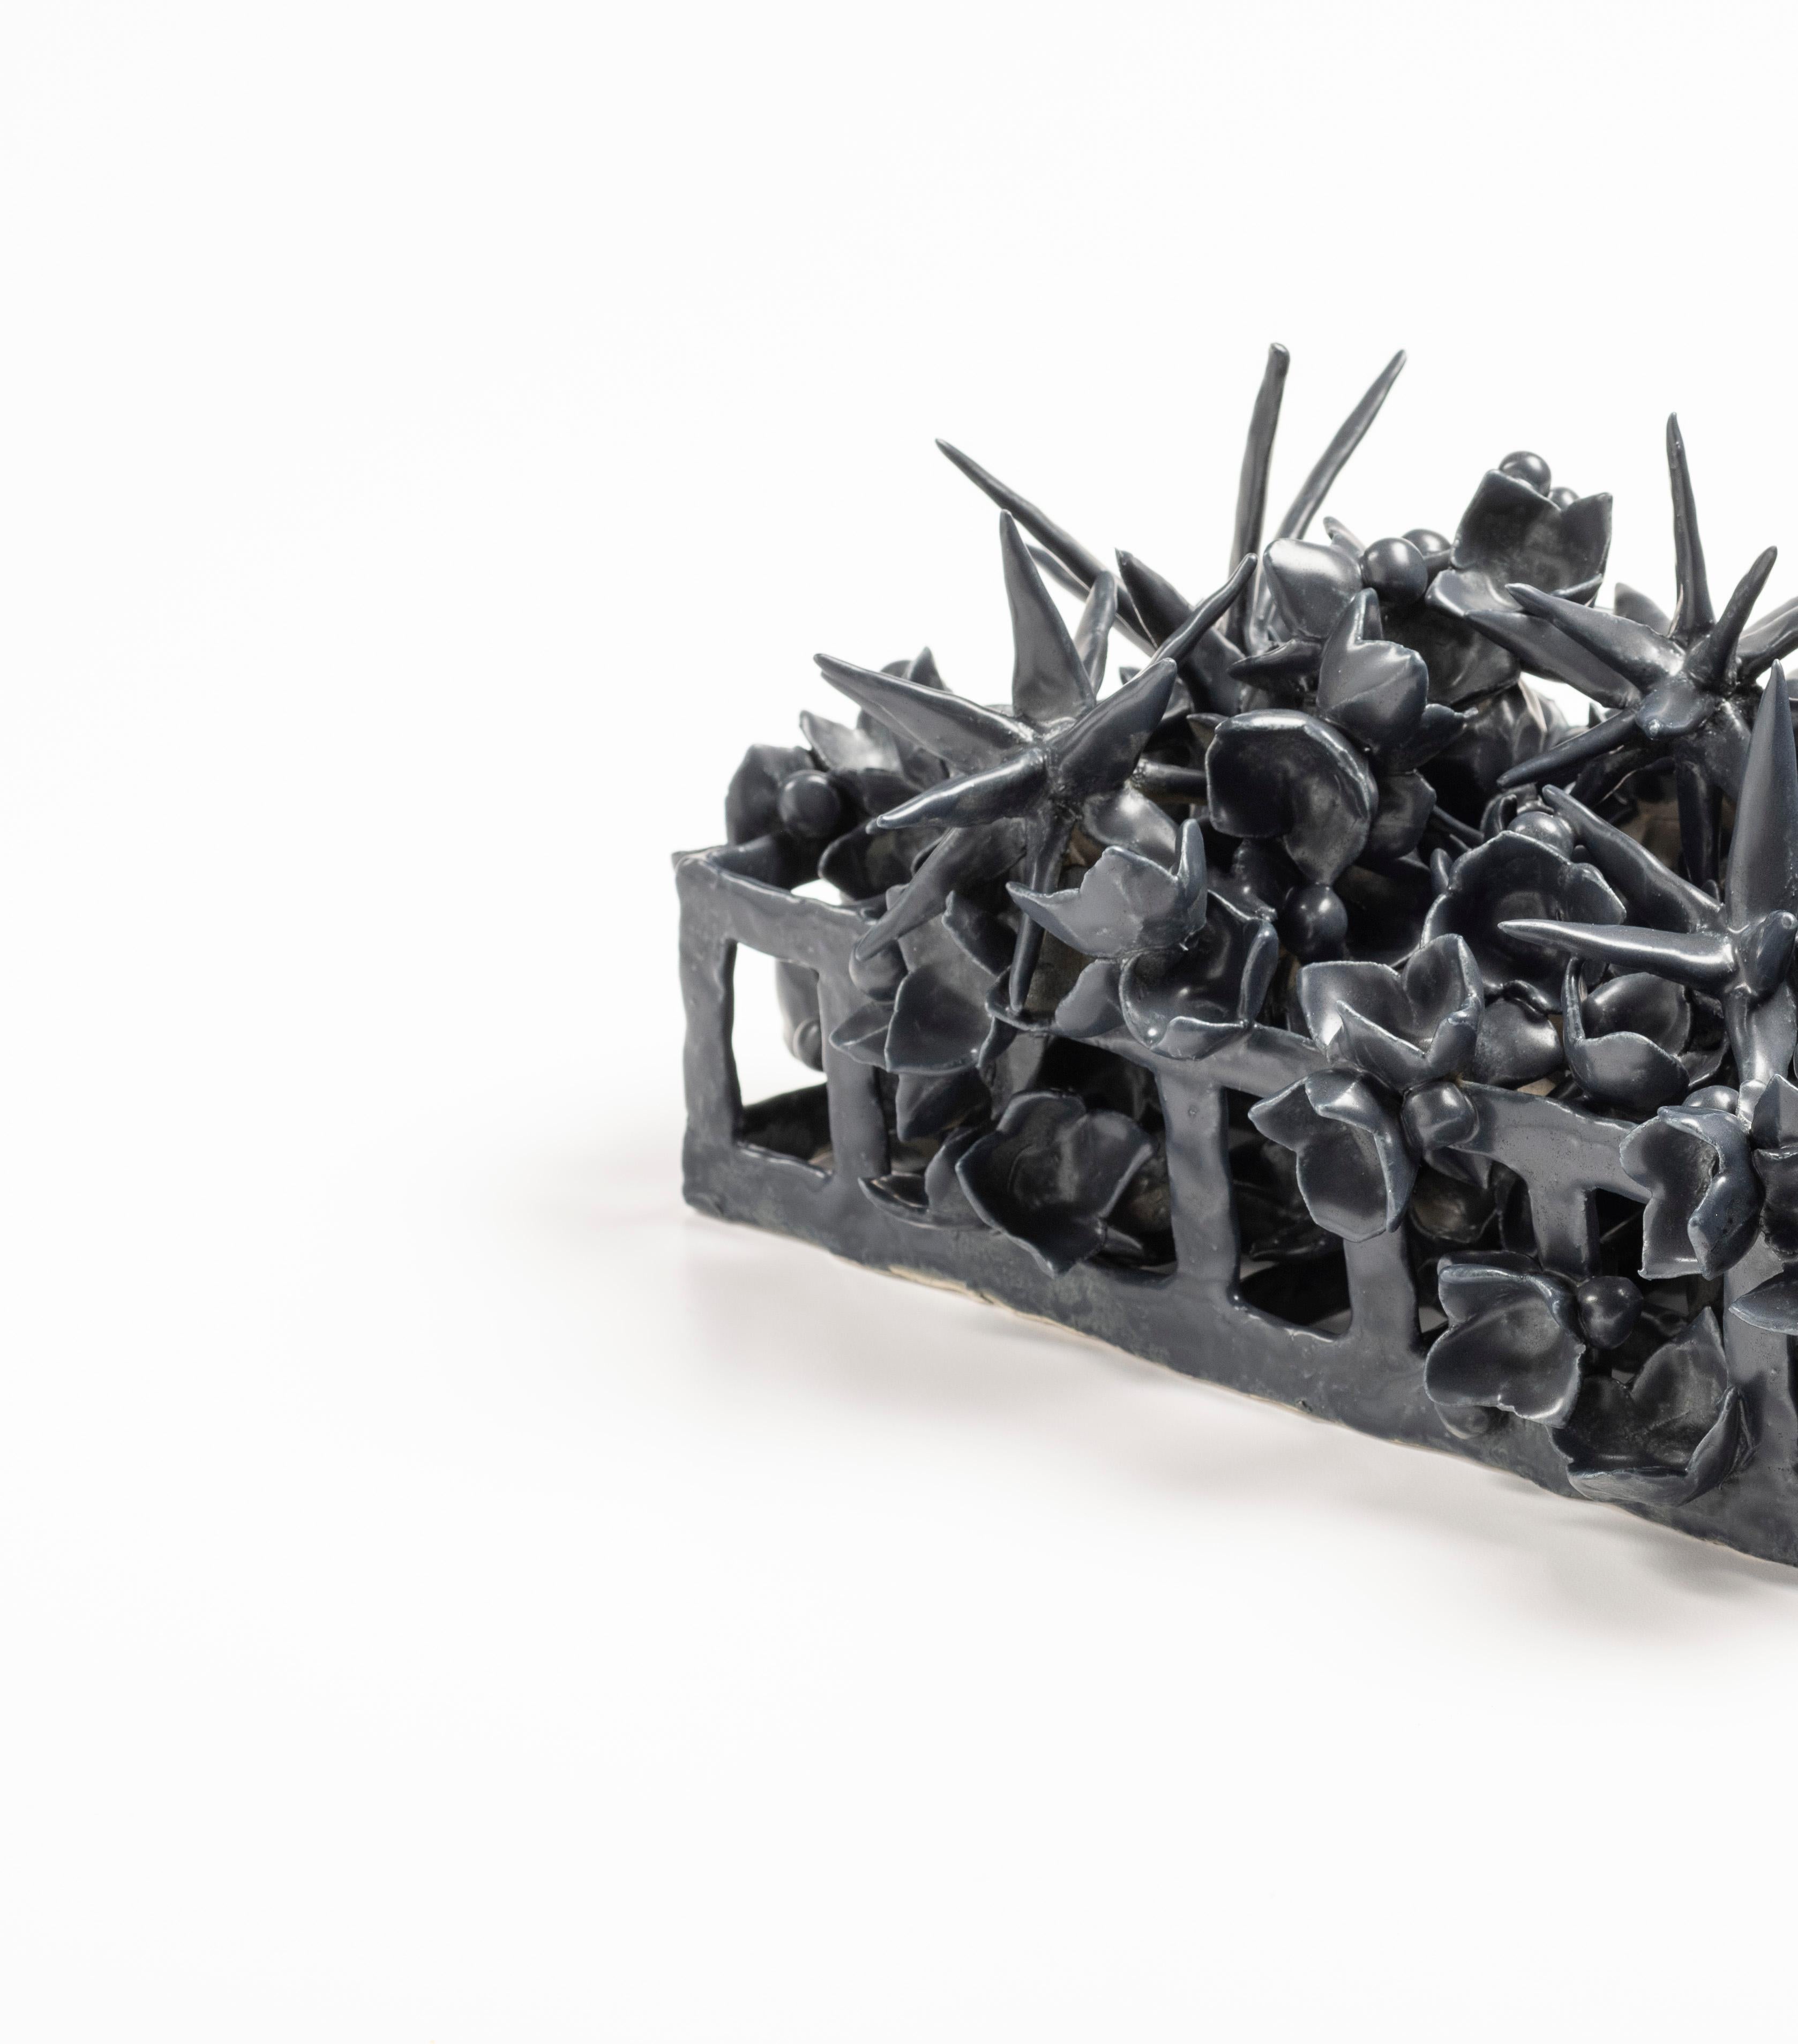 Organic Modern Joanna Poag Binding Time (Black Grid with Stars) Ceramic Sculpture, 2020 For Sale